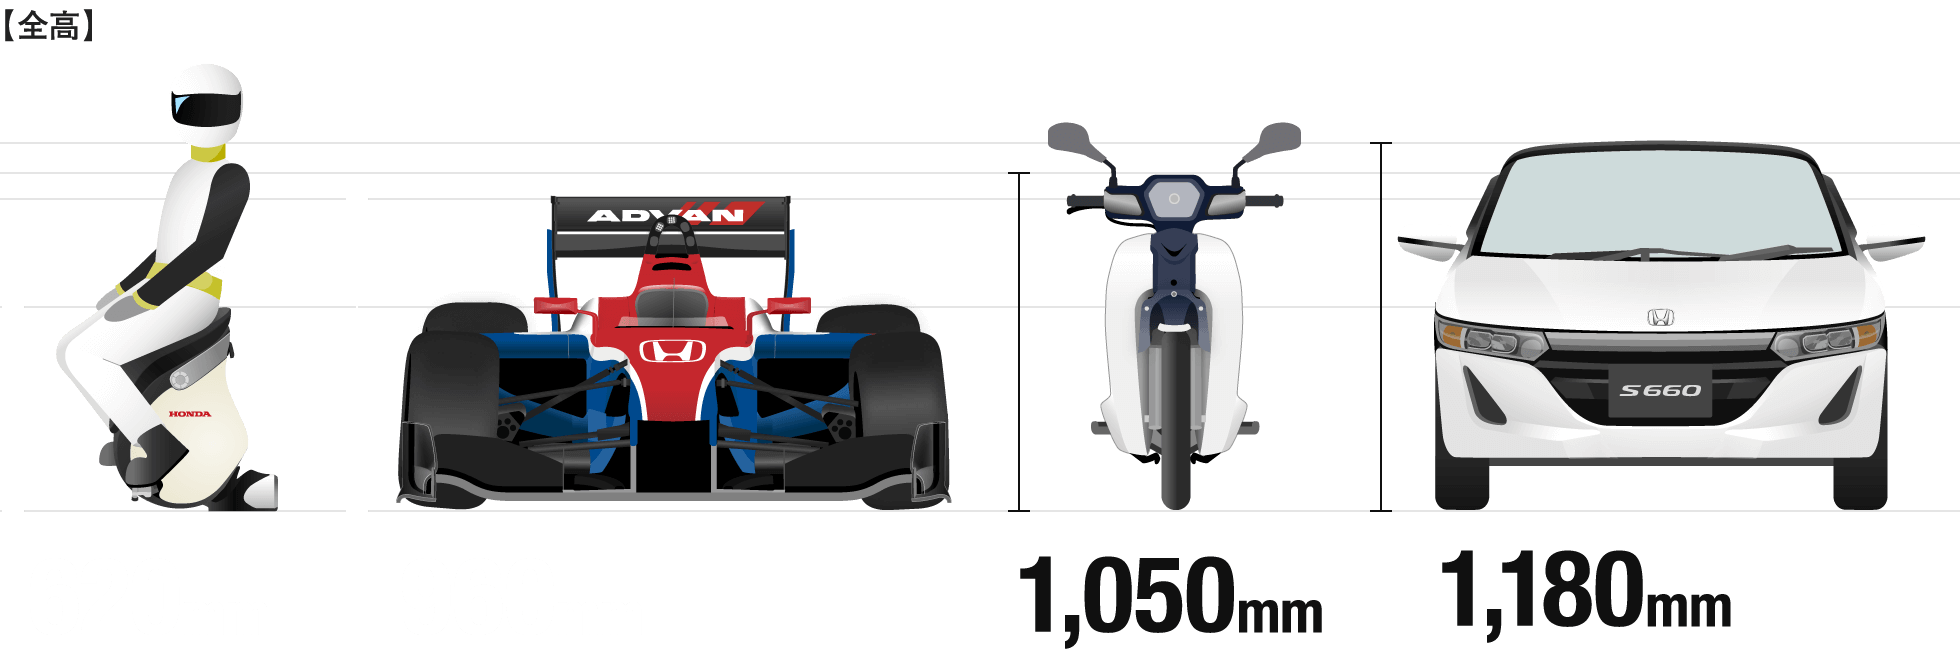 Honda 全日本スーパーフォーミュラ選手権 Super Formula 大図鑑 1 1 Super Fomulaのマシンについて